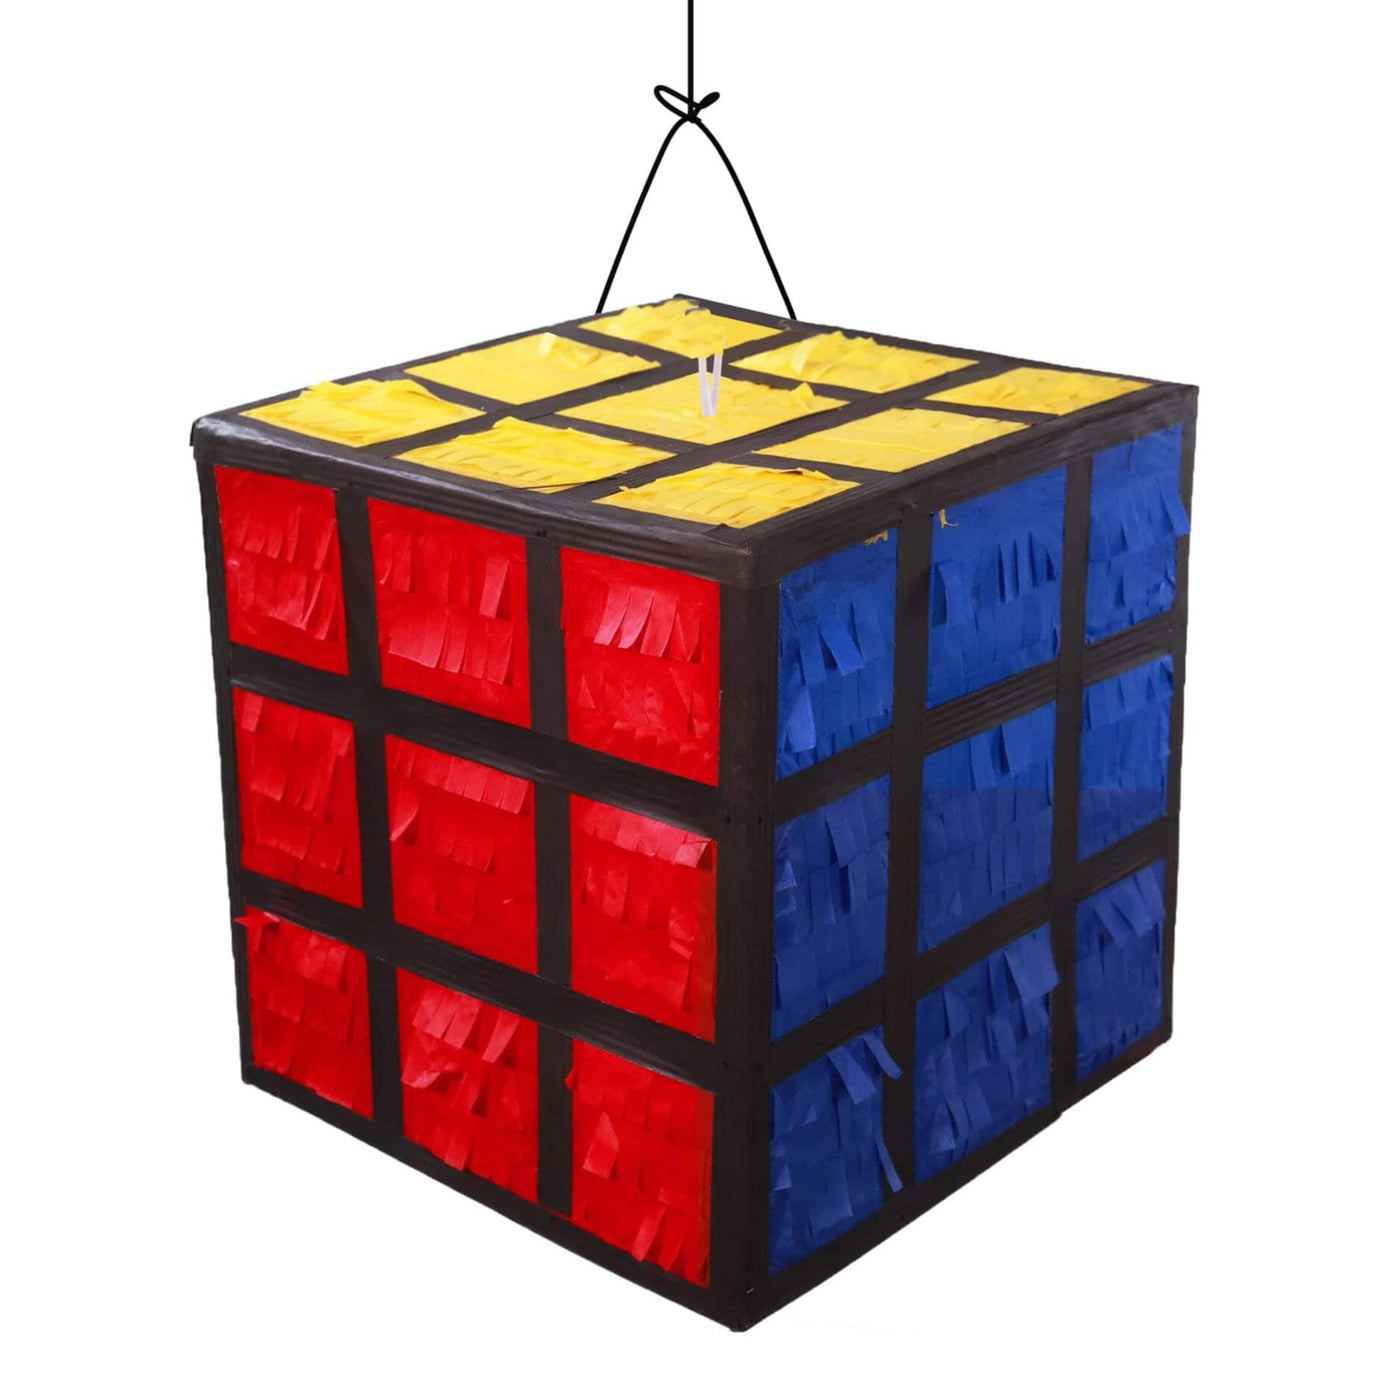 Rubik's Cube Pinata - Amazing Pinatas 